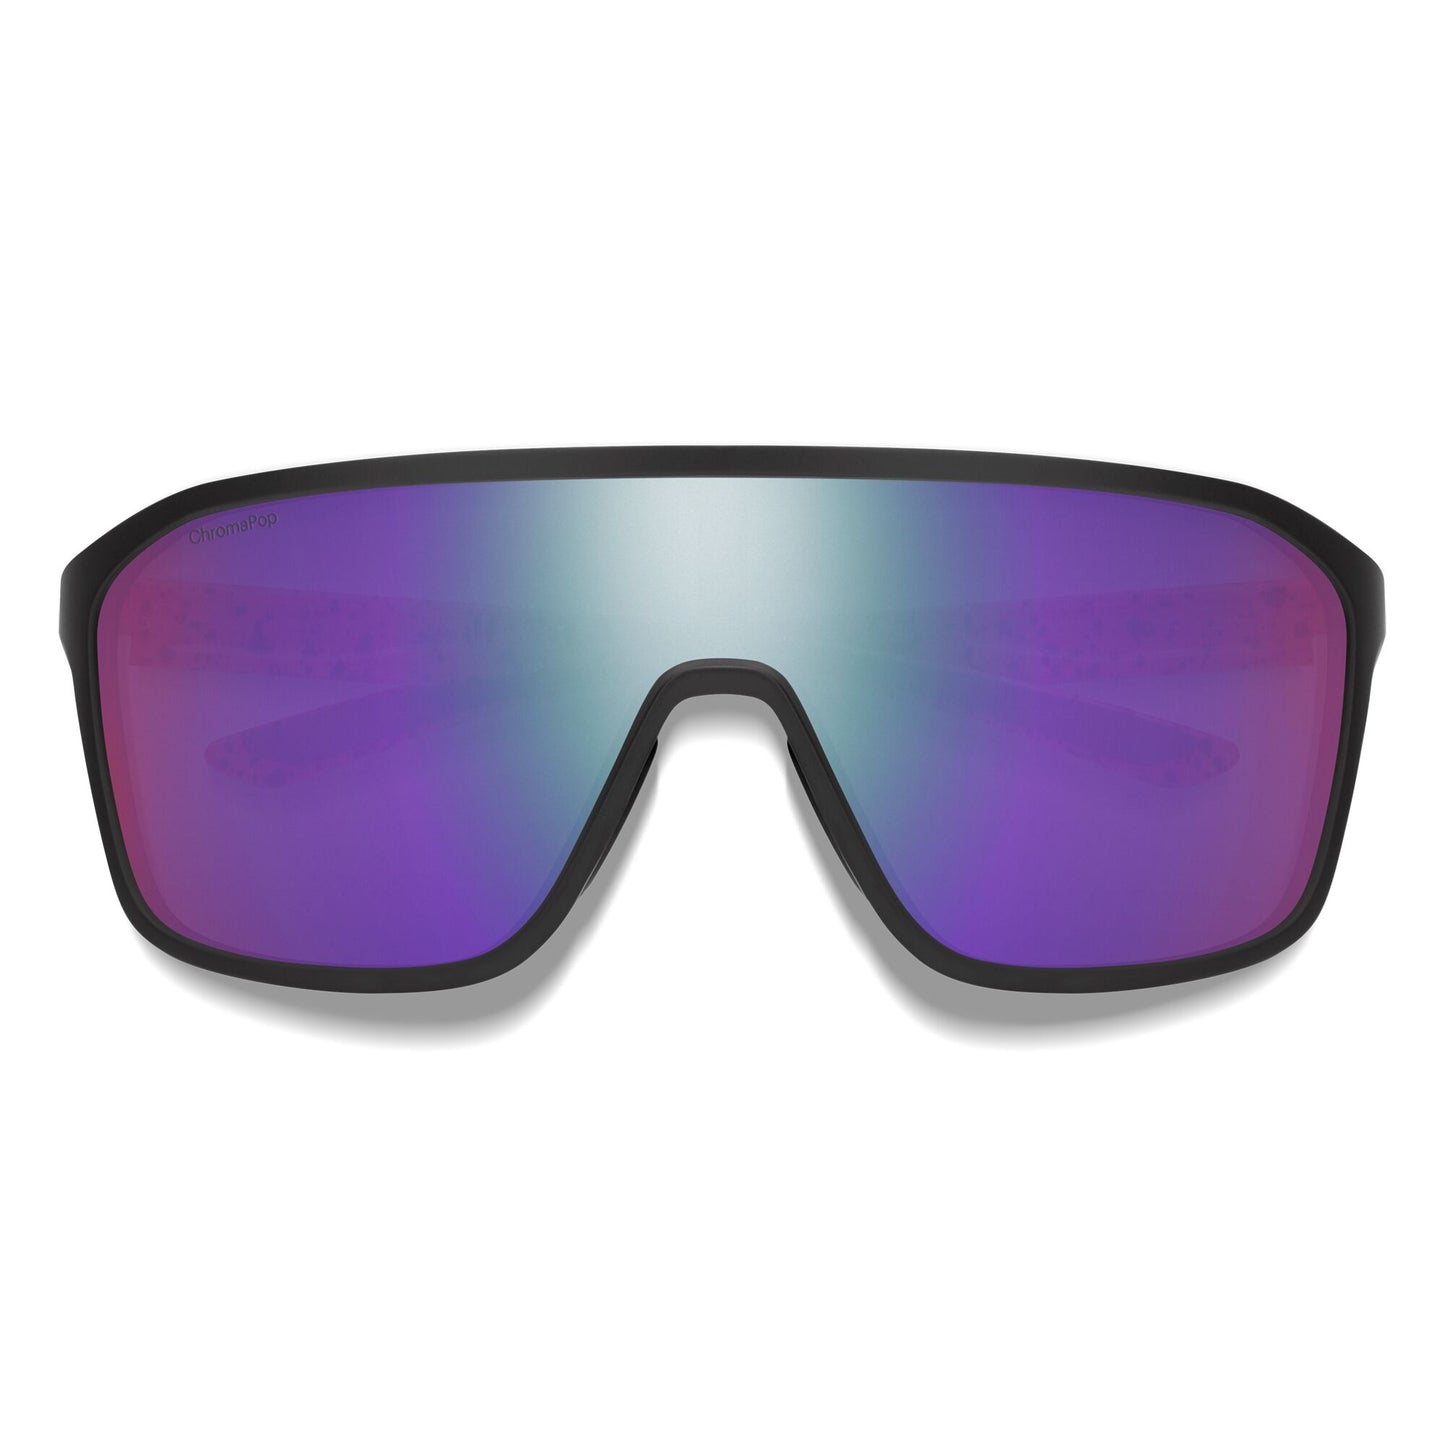 Smith Boomtown Sunglasses - One Size Fits Most - Matte Wild Child - ChromaPop Violet Mirror Lens